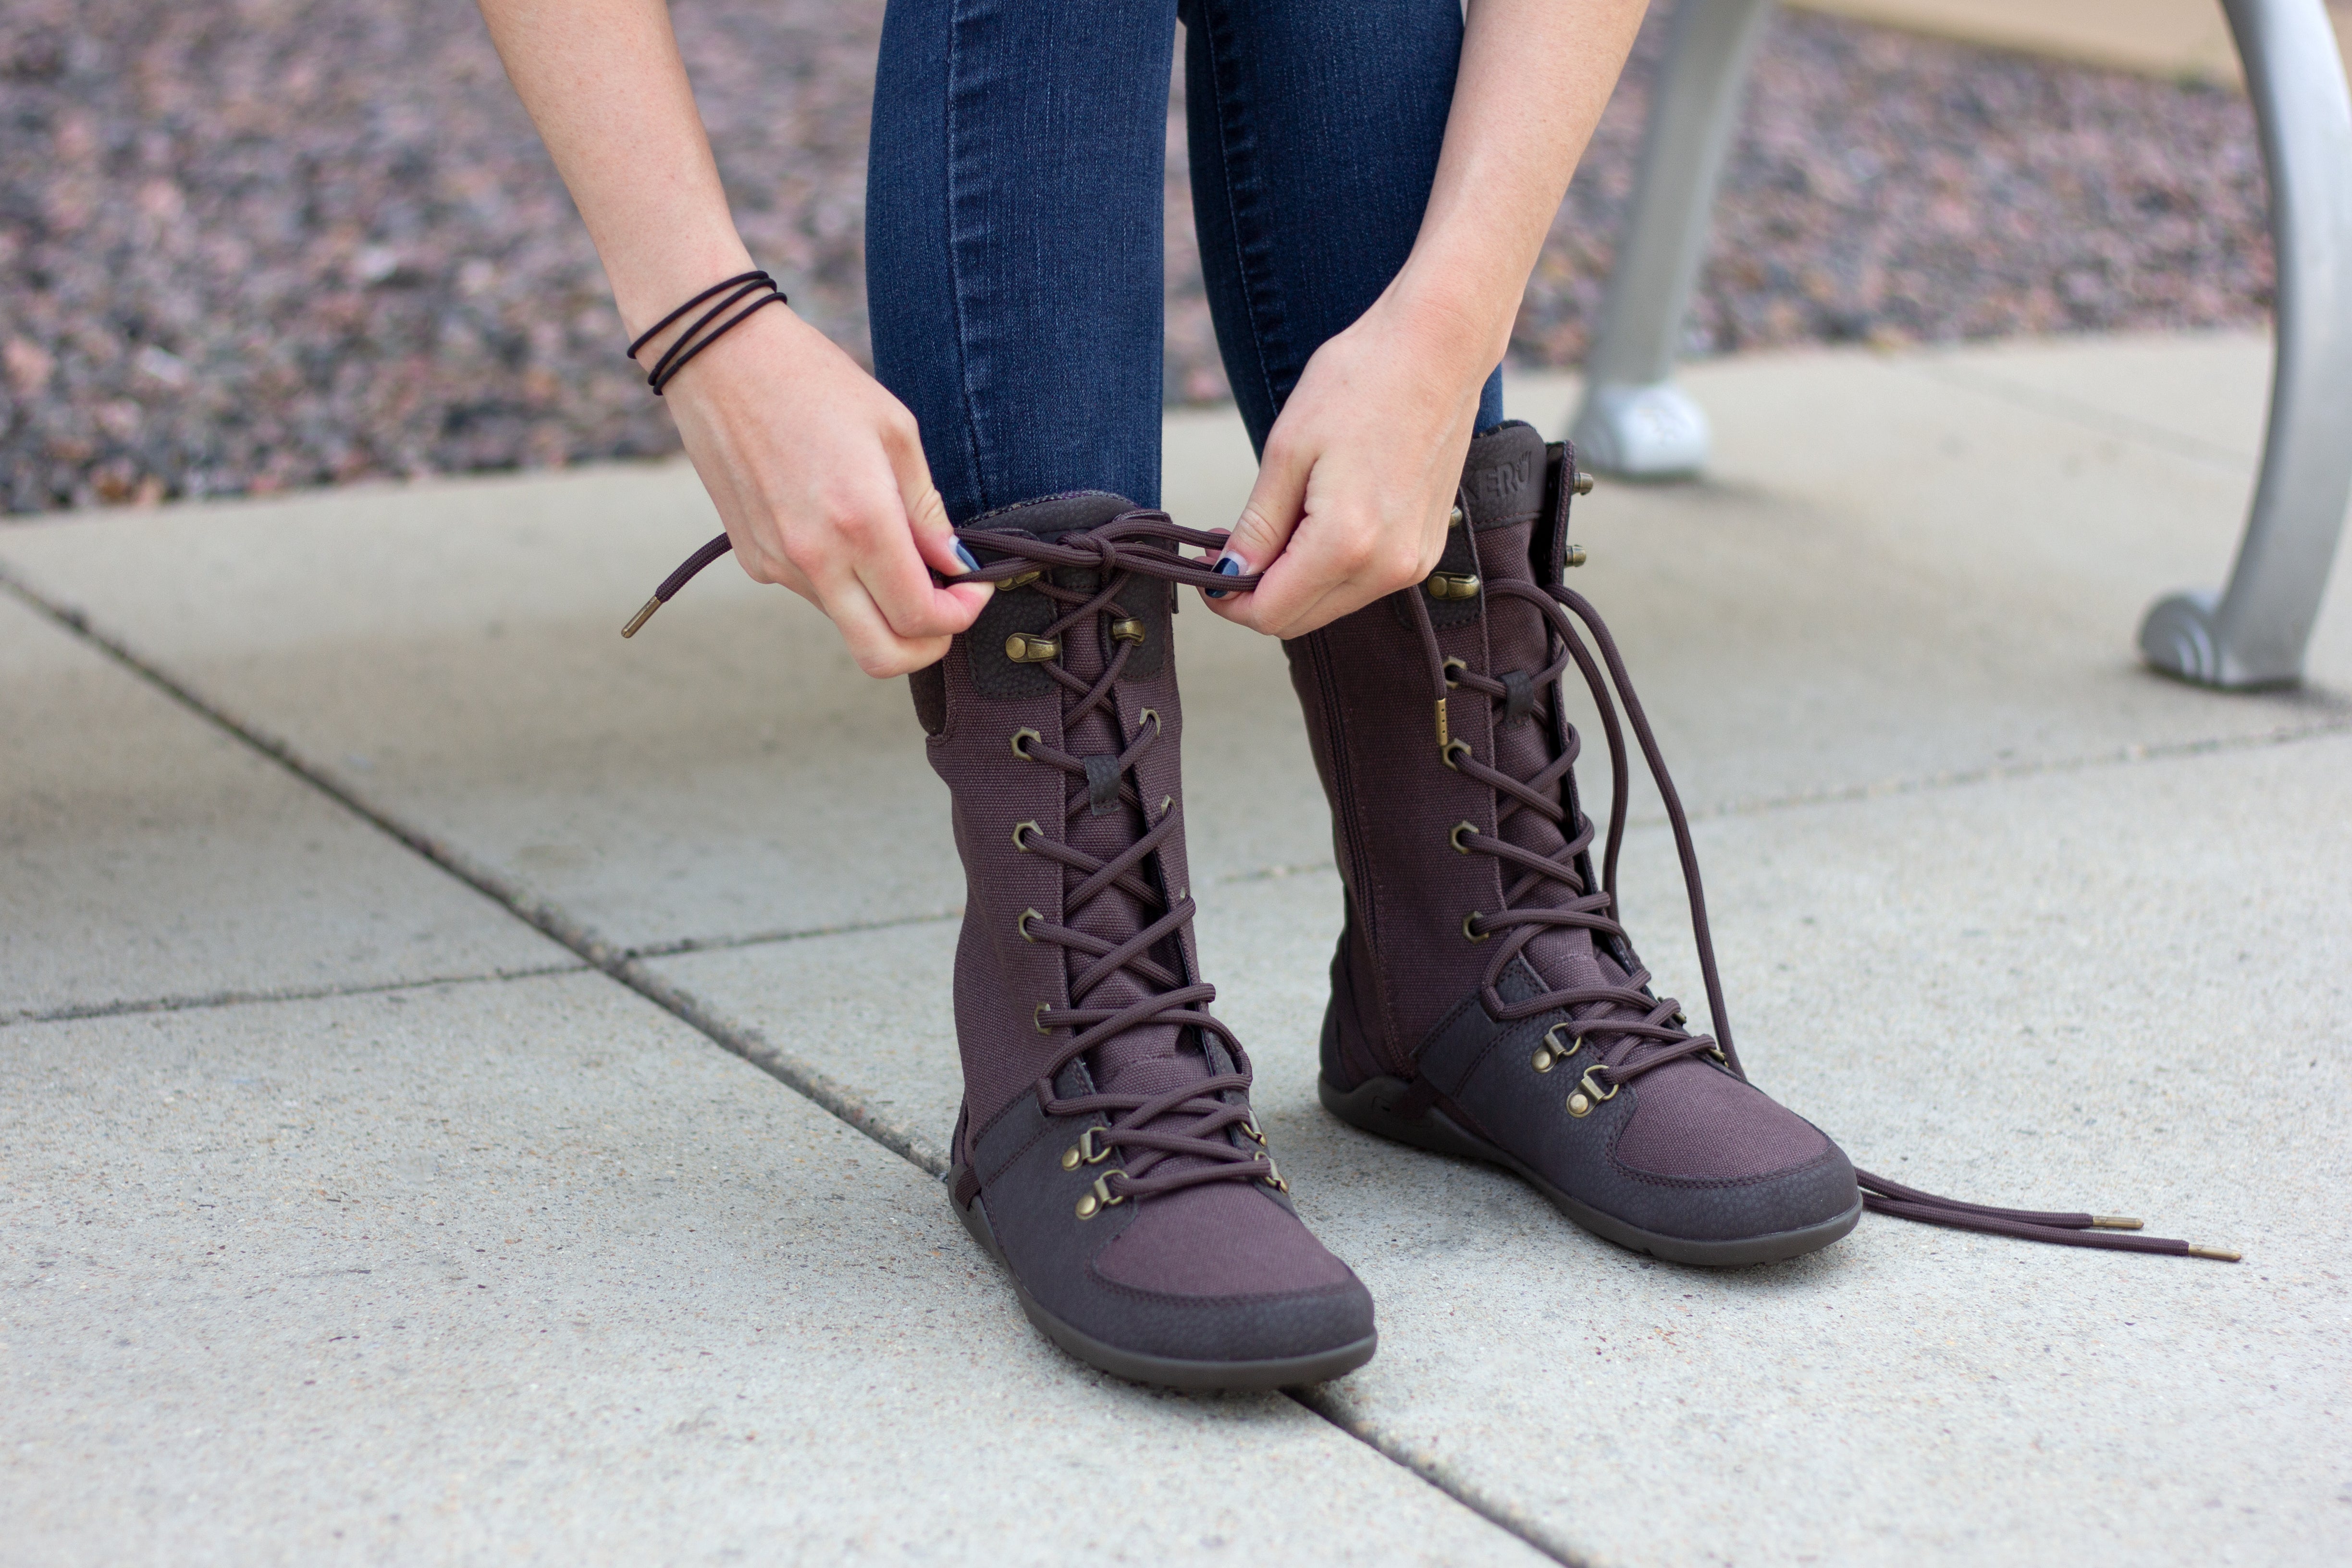 Xero Shoes Mika barfods vinterstøvler til kvinder i farven chocolate plum, lifestyle